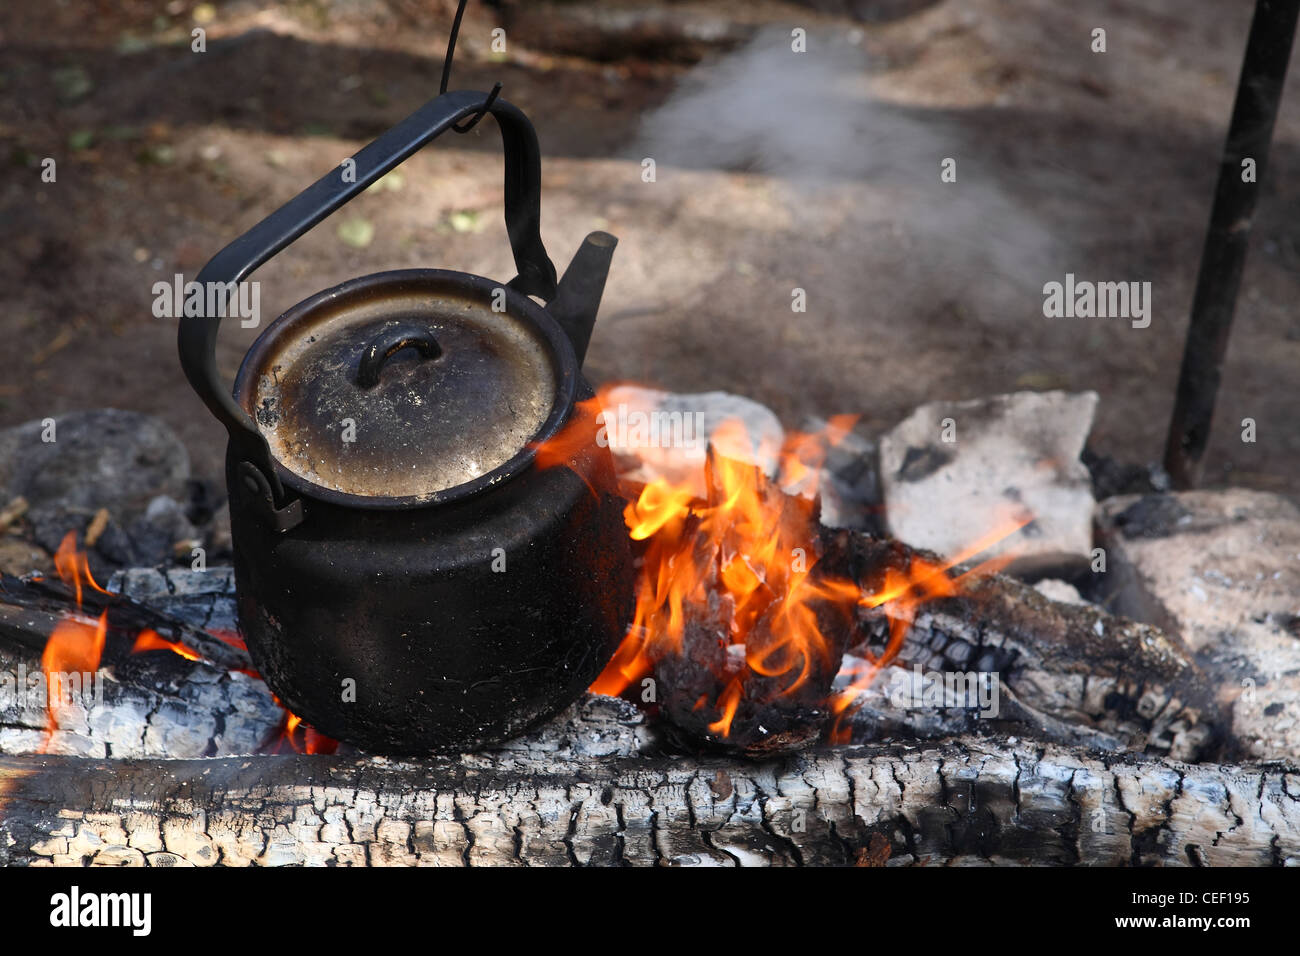 Teekessel auf dem camping Feuer Stockfoto